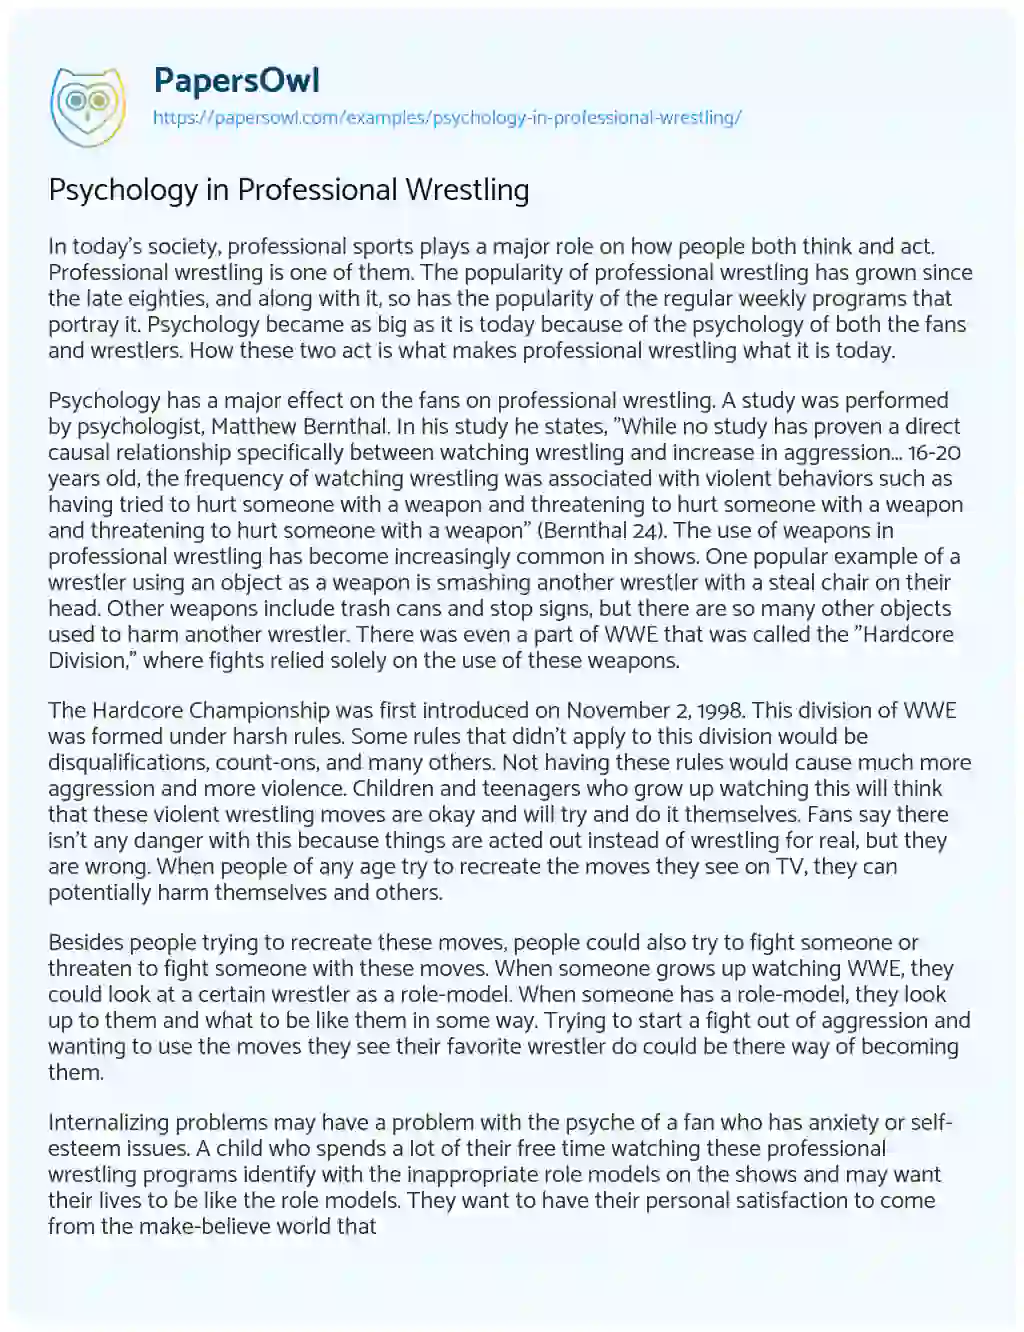 Essay on Psychology in Professional Wrestling